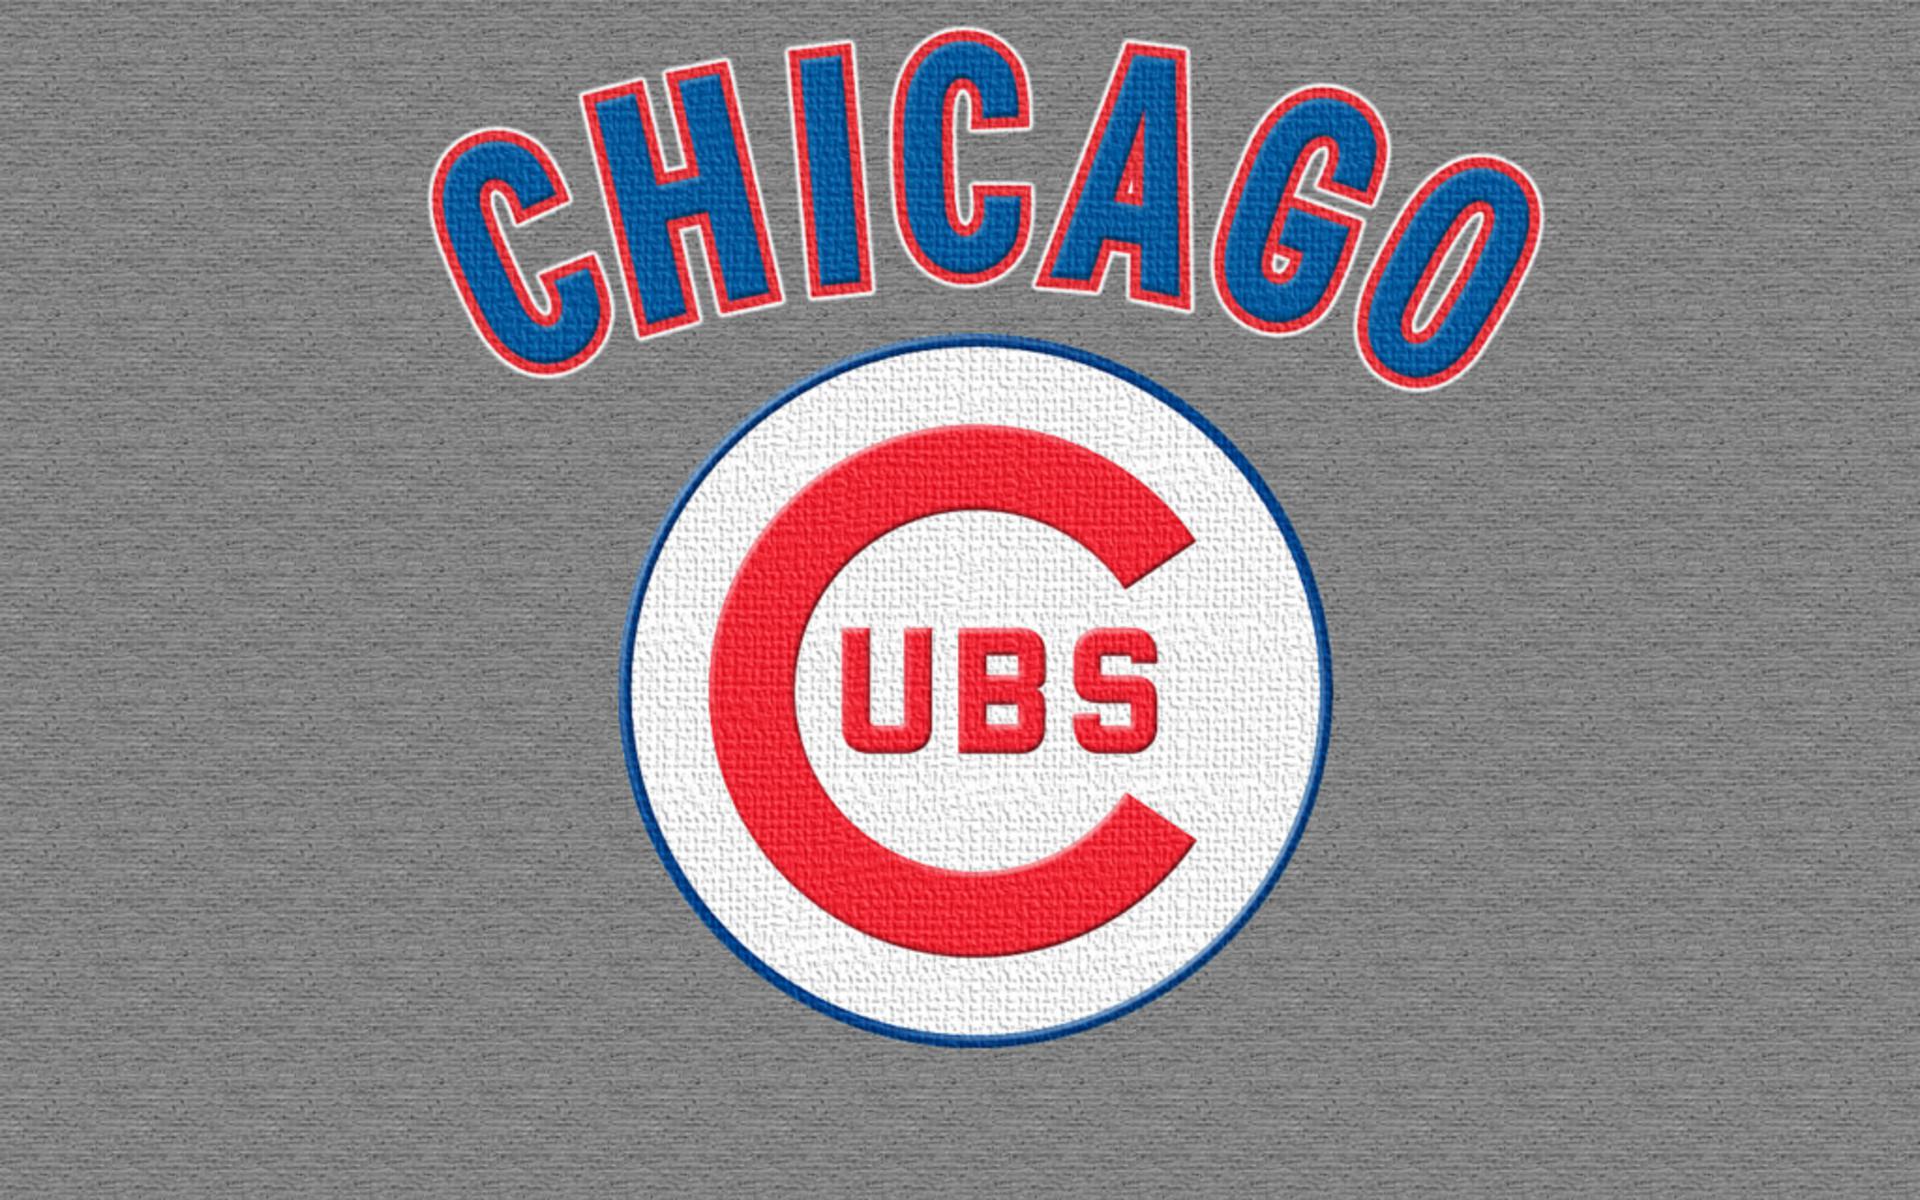 Chicago Cubs wallpaper - 935617